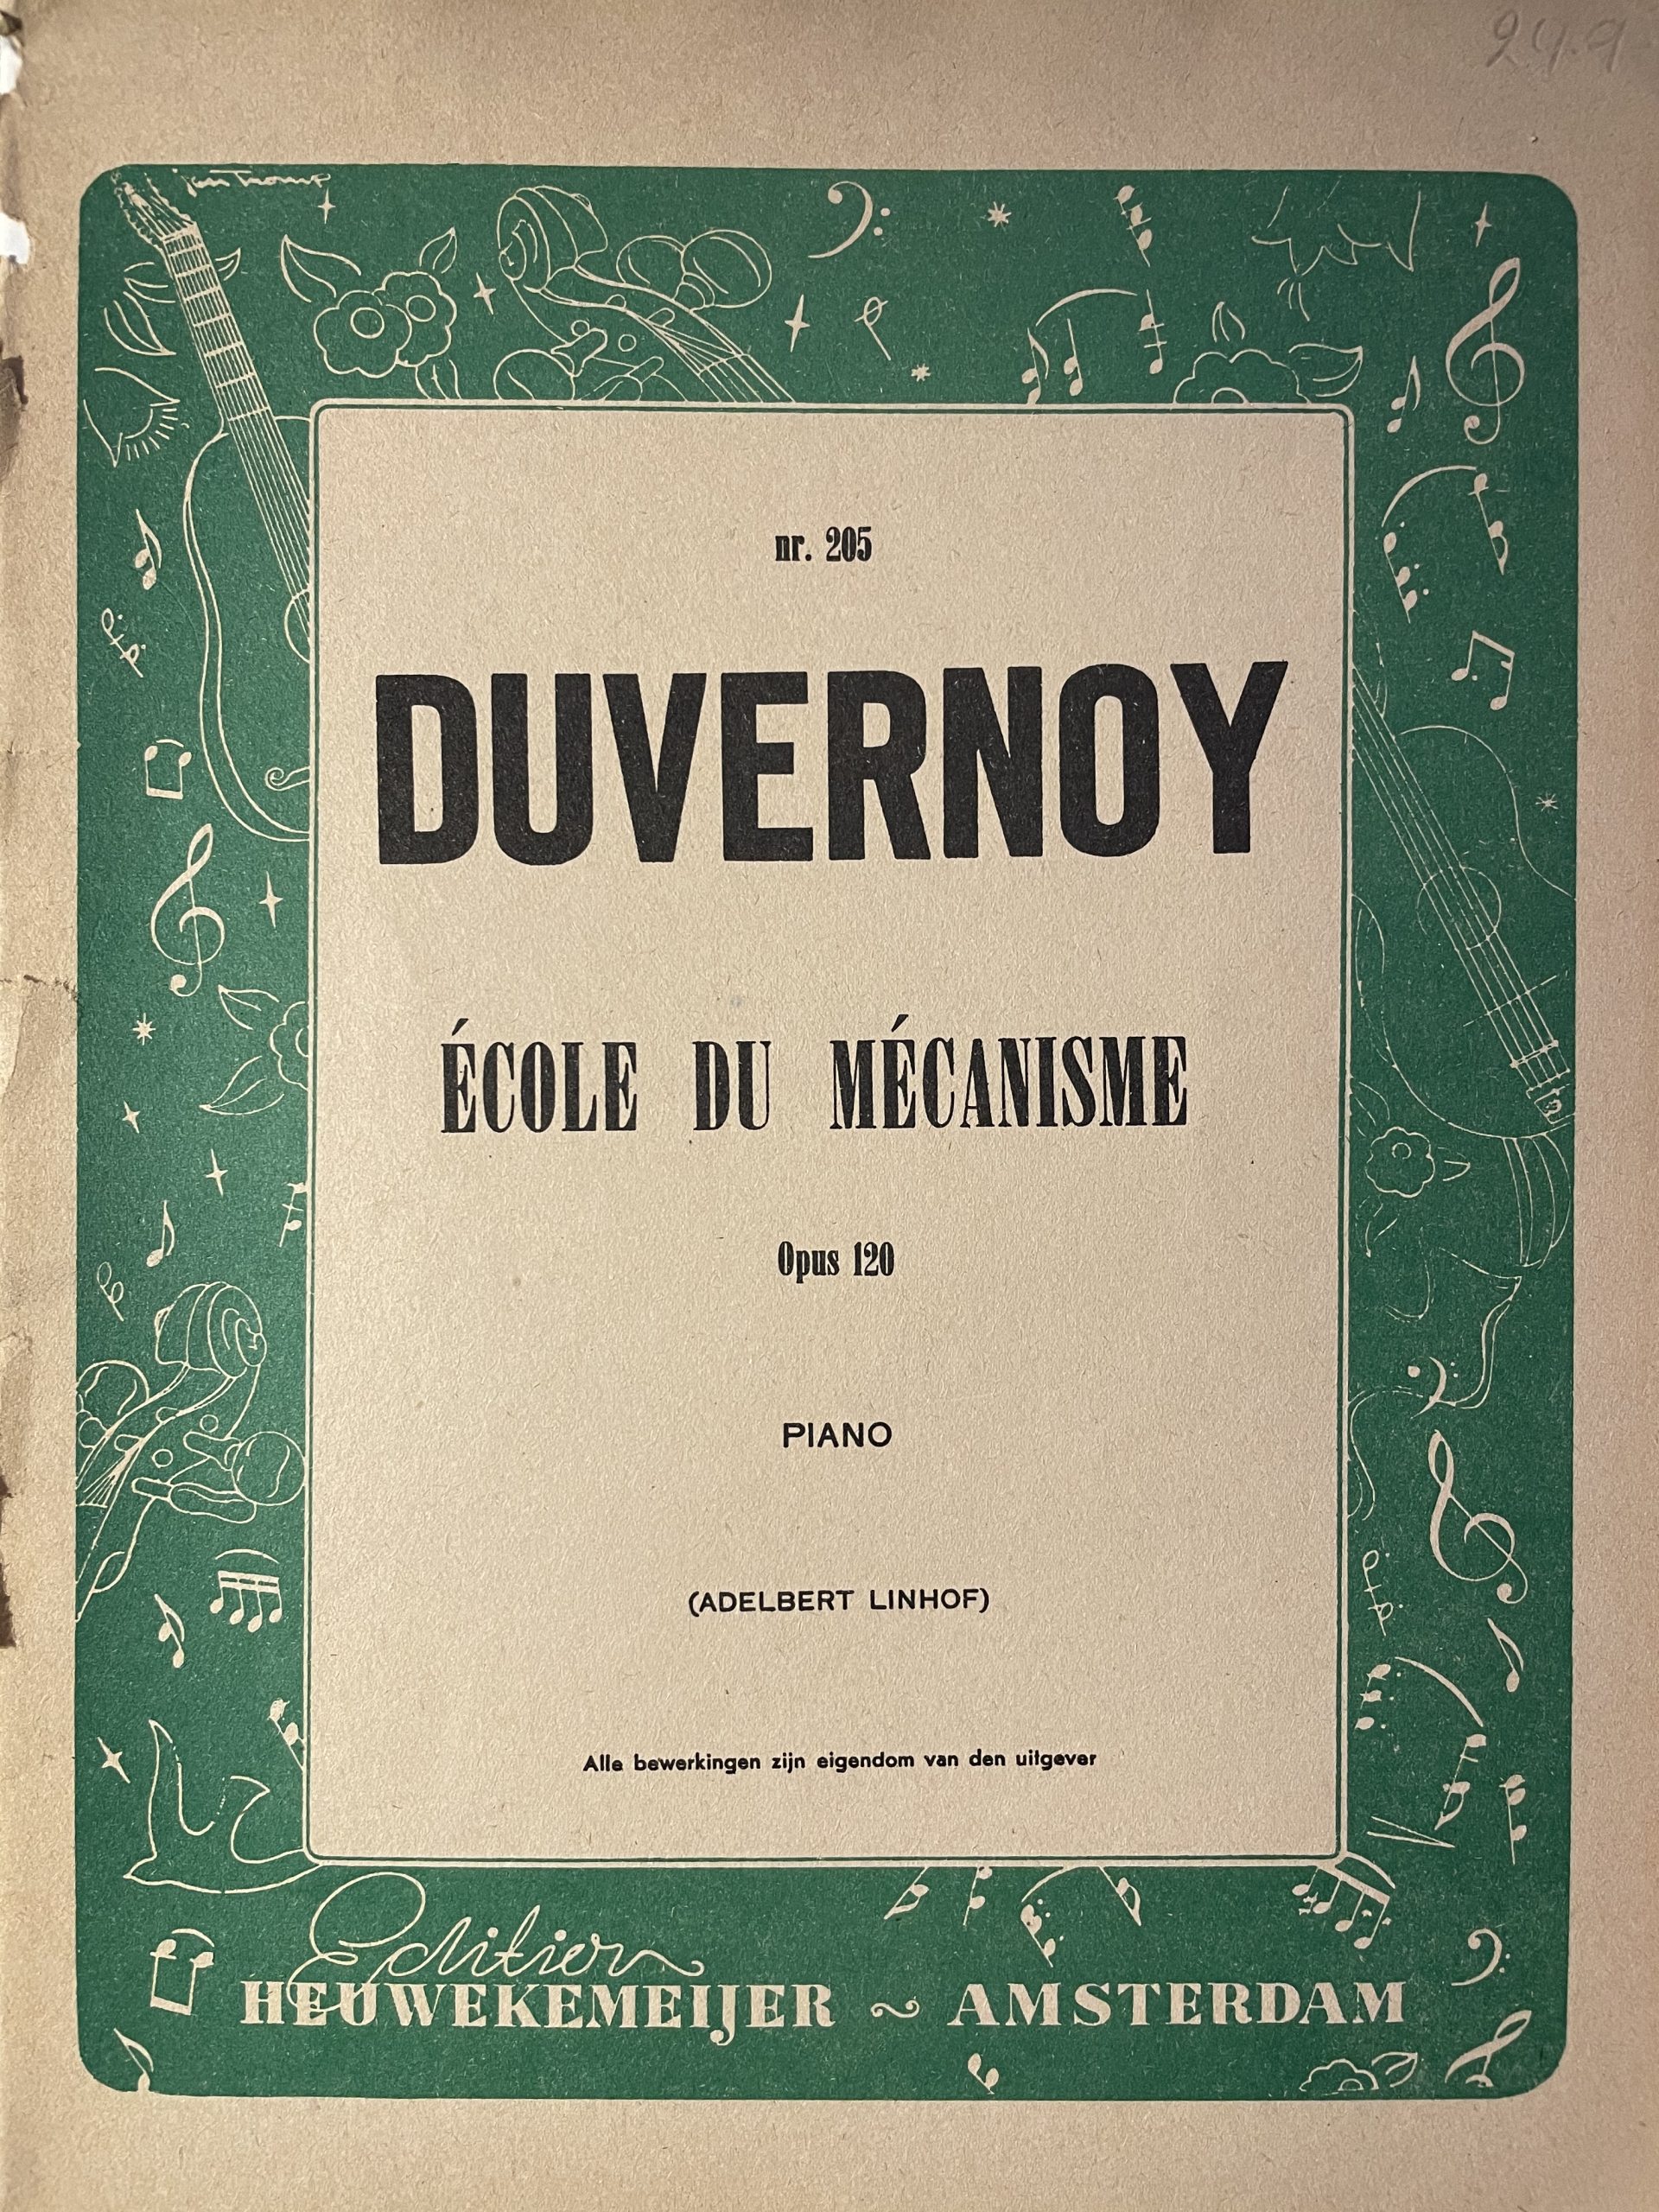 Ecole du mechanisme - Duvernoy - Deel 1